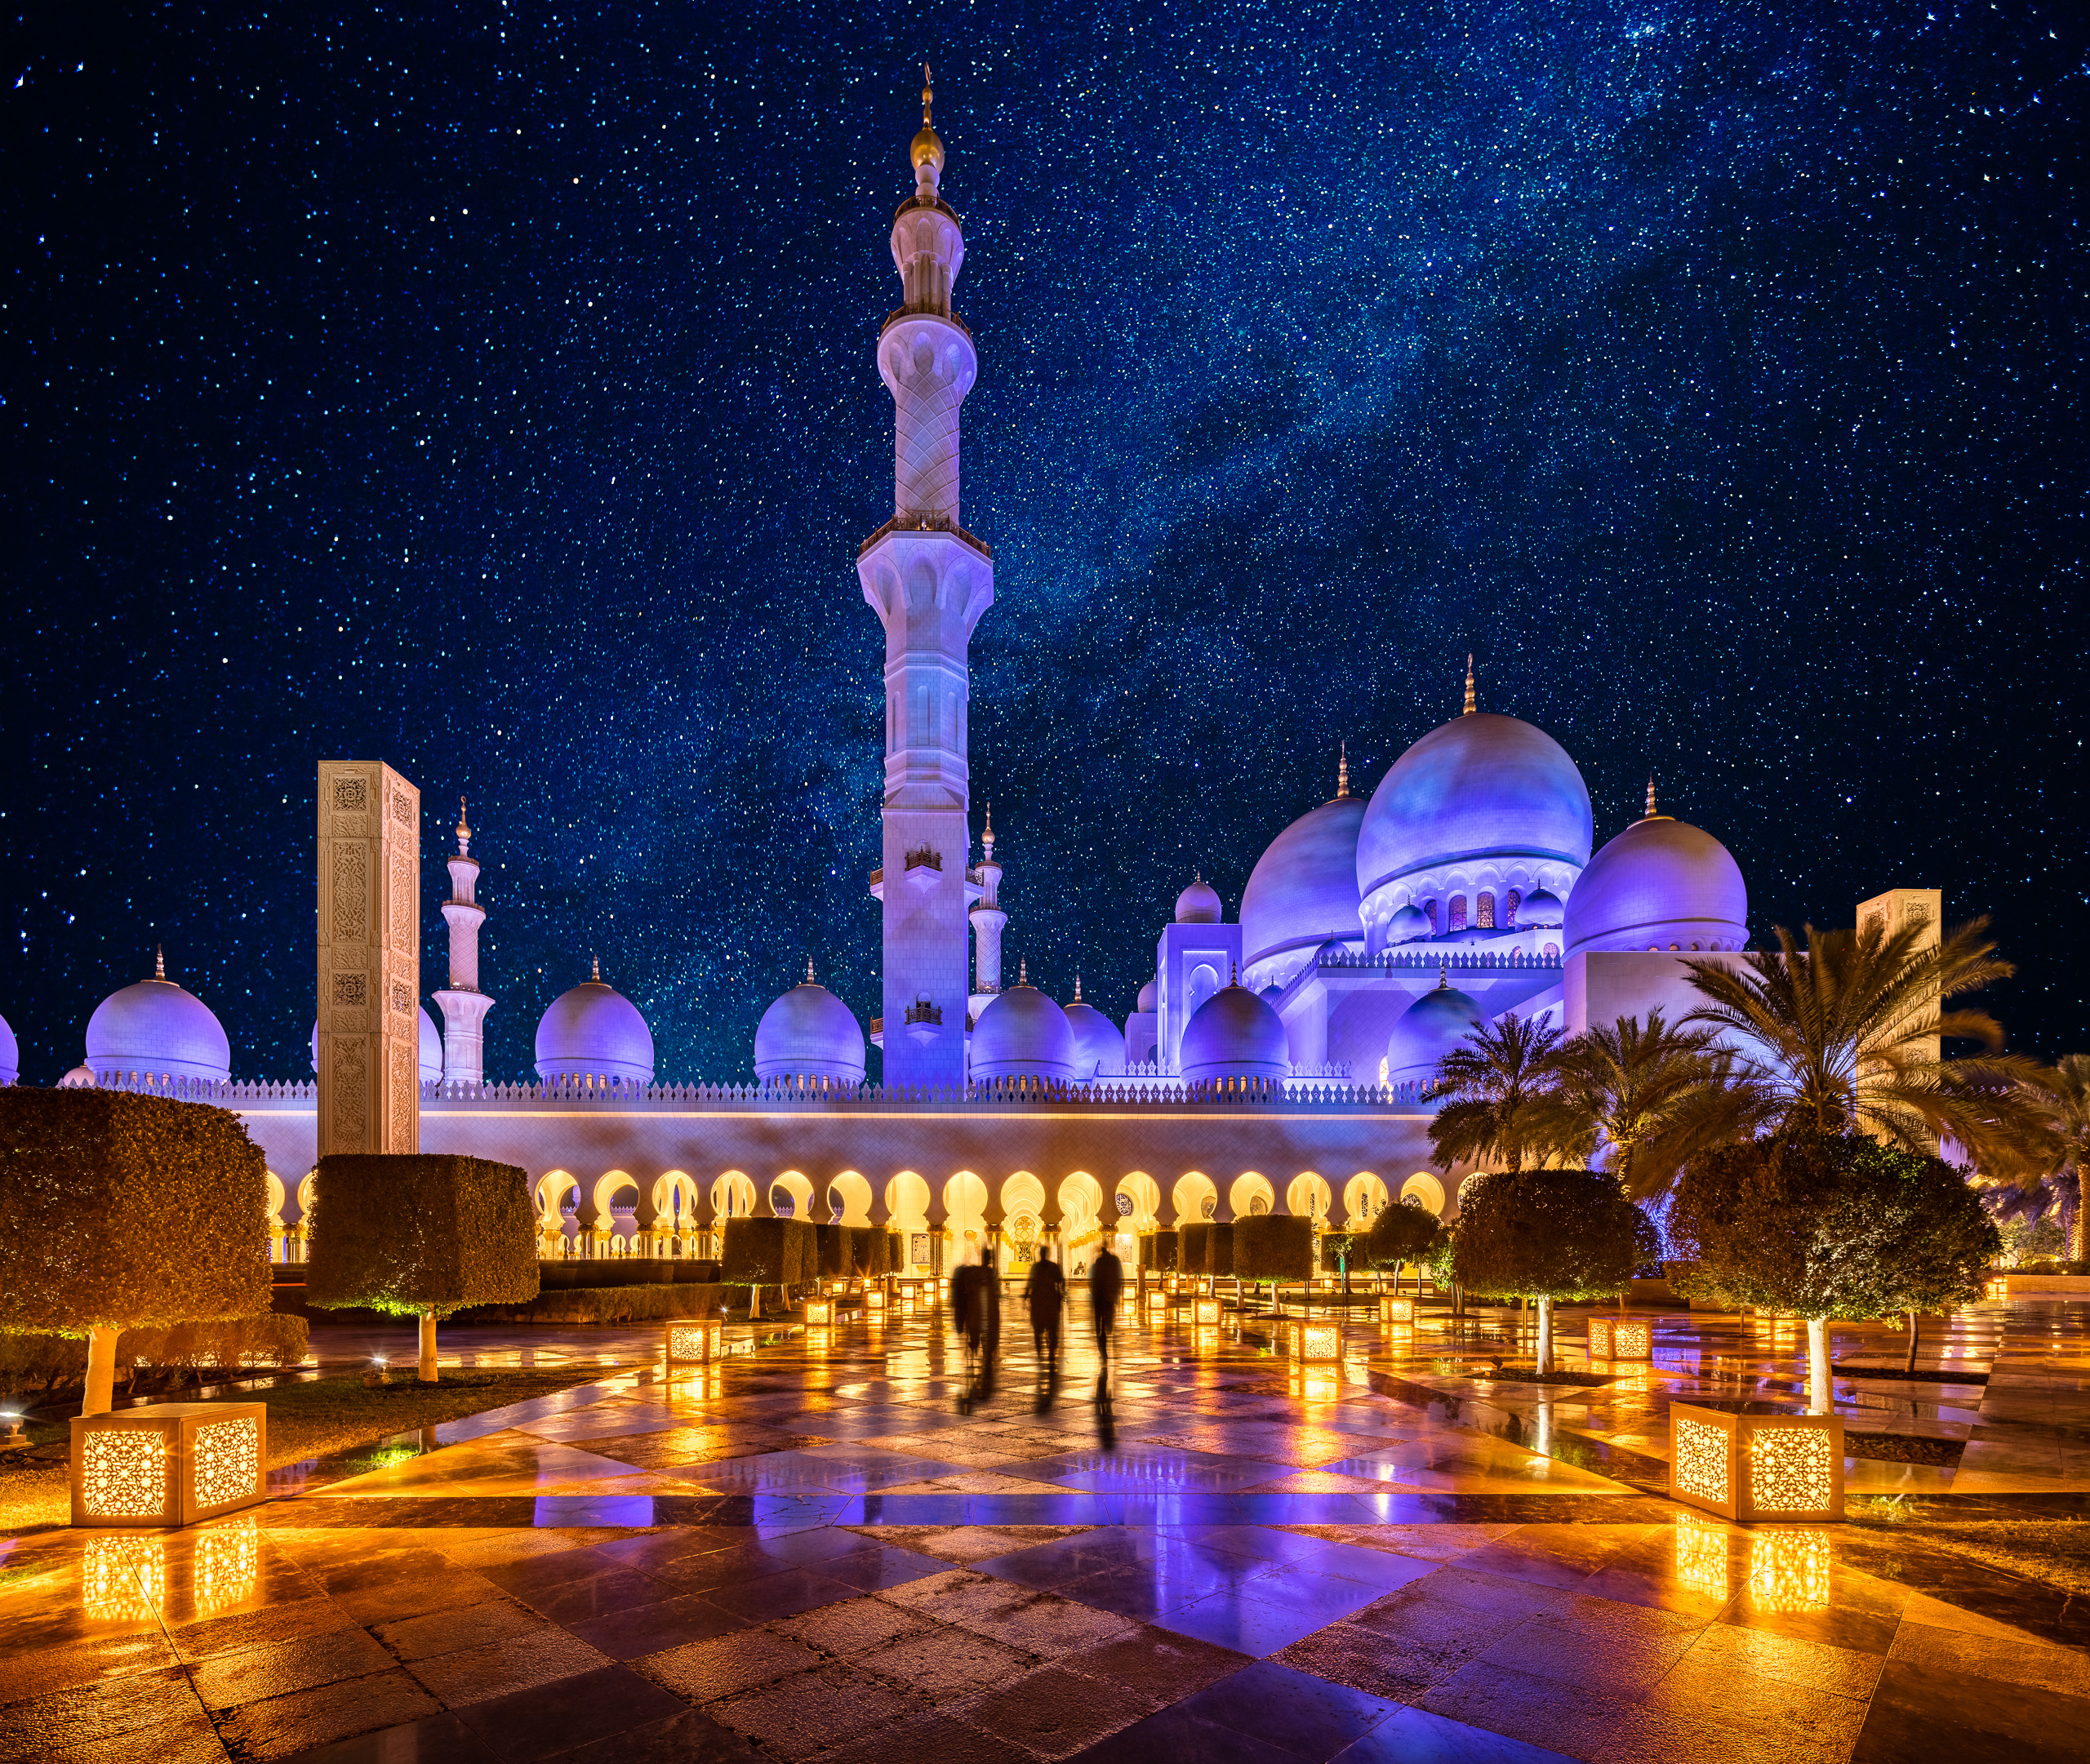 01-Fotograf-Andreas-Martin-Stuttgart-Photography-Abu-Dhabi-Dubai-mosque-sheik-zayed-szgmc-architecture-sky-night